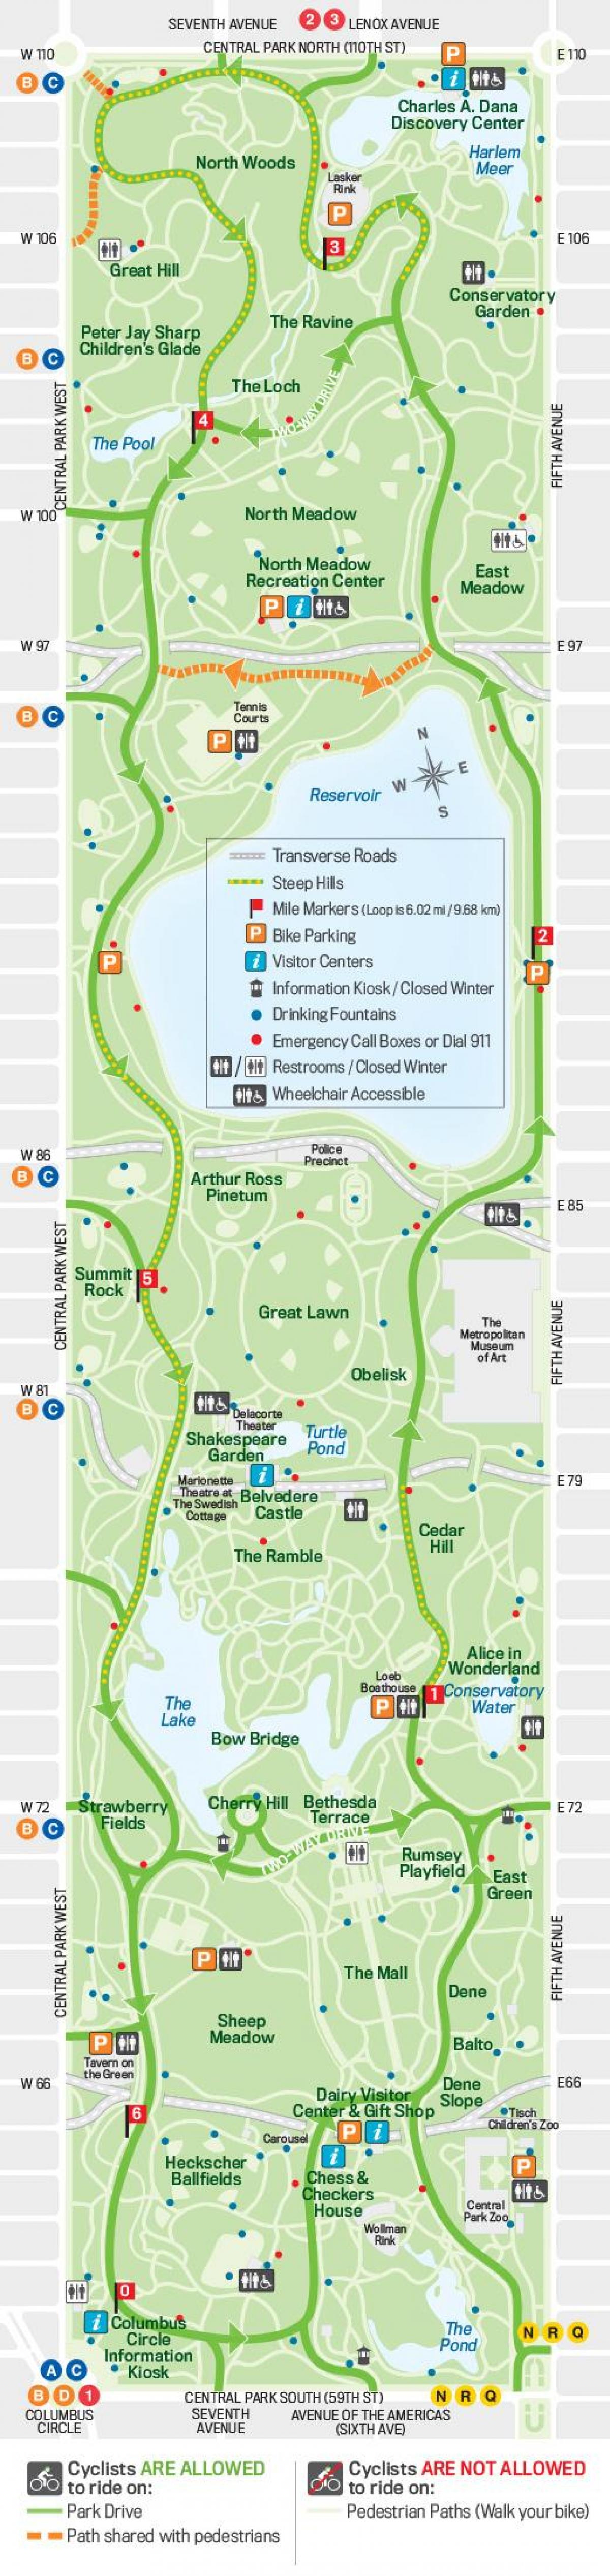 sykkel kart over central park